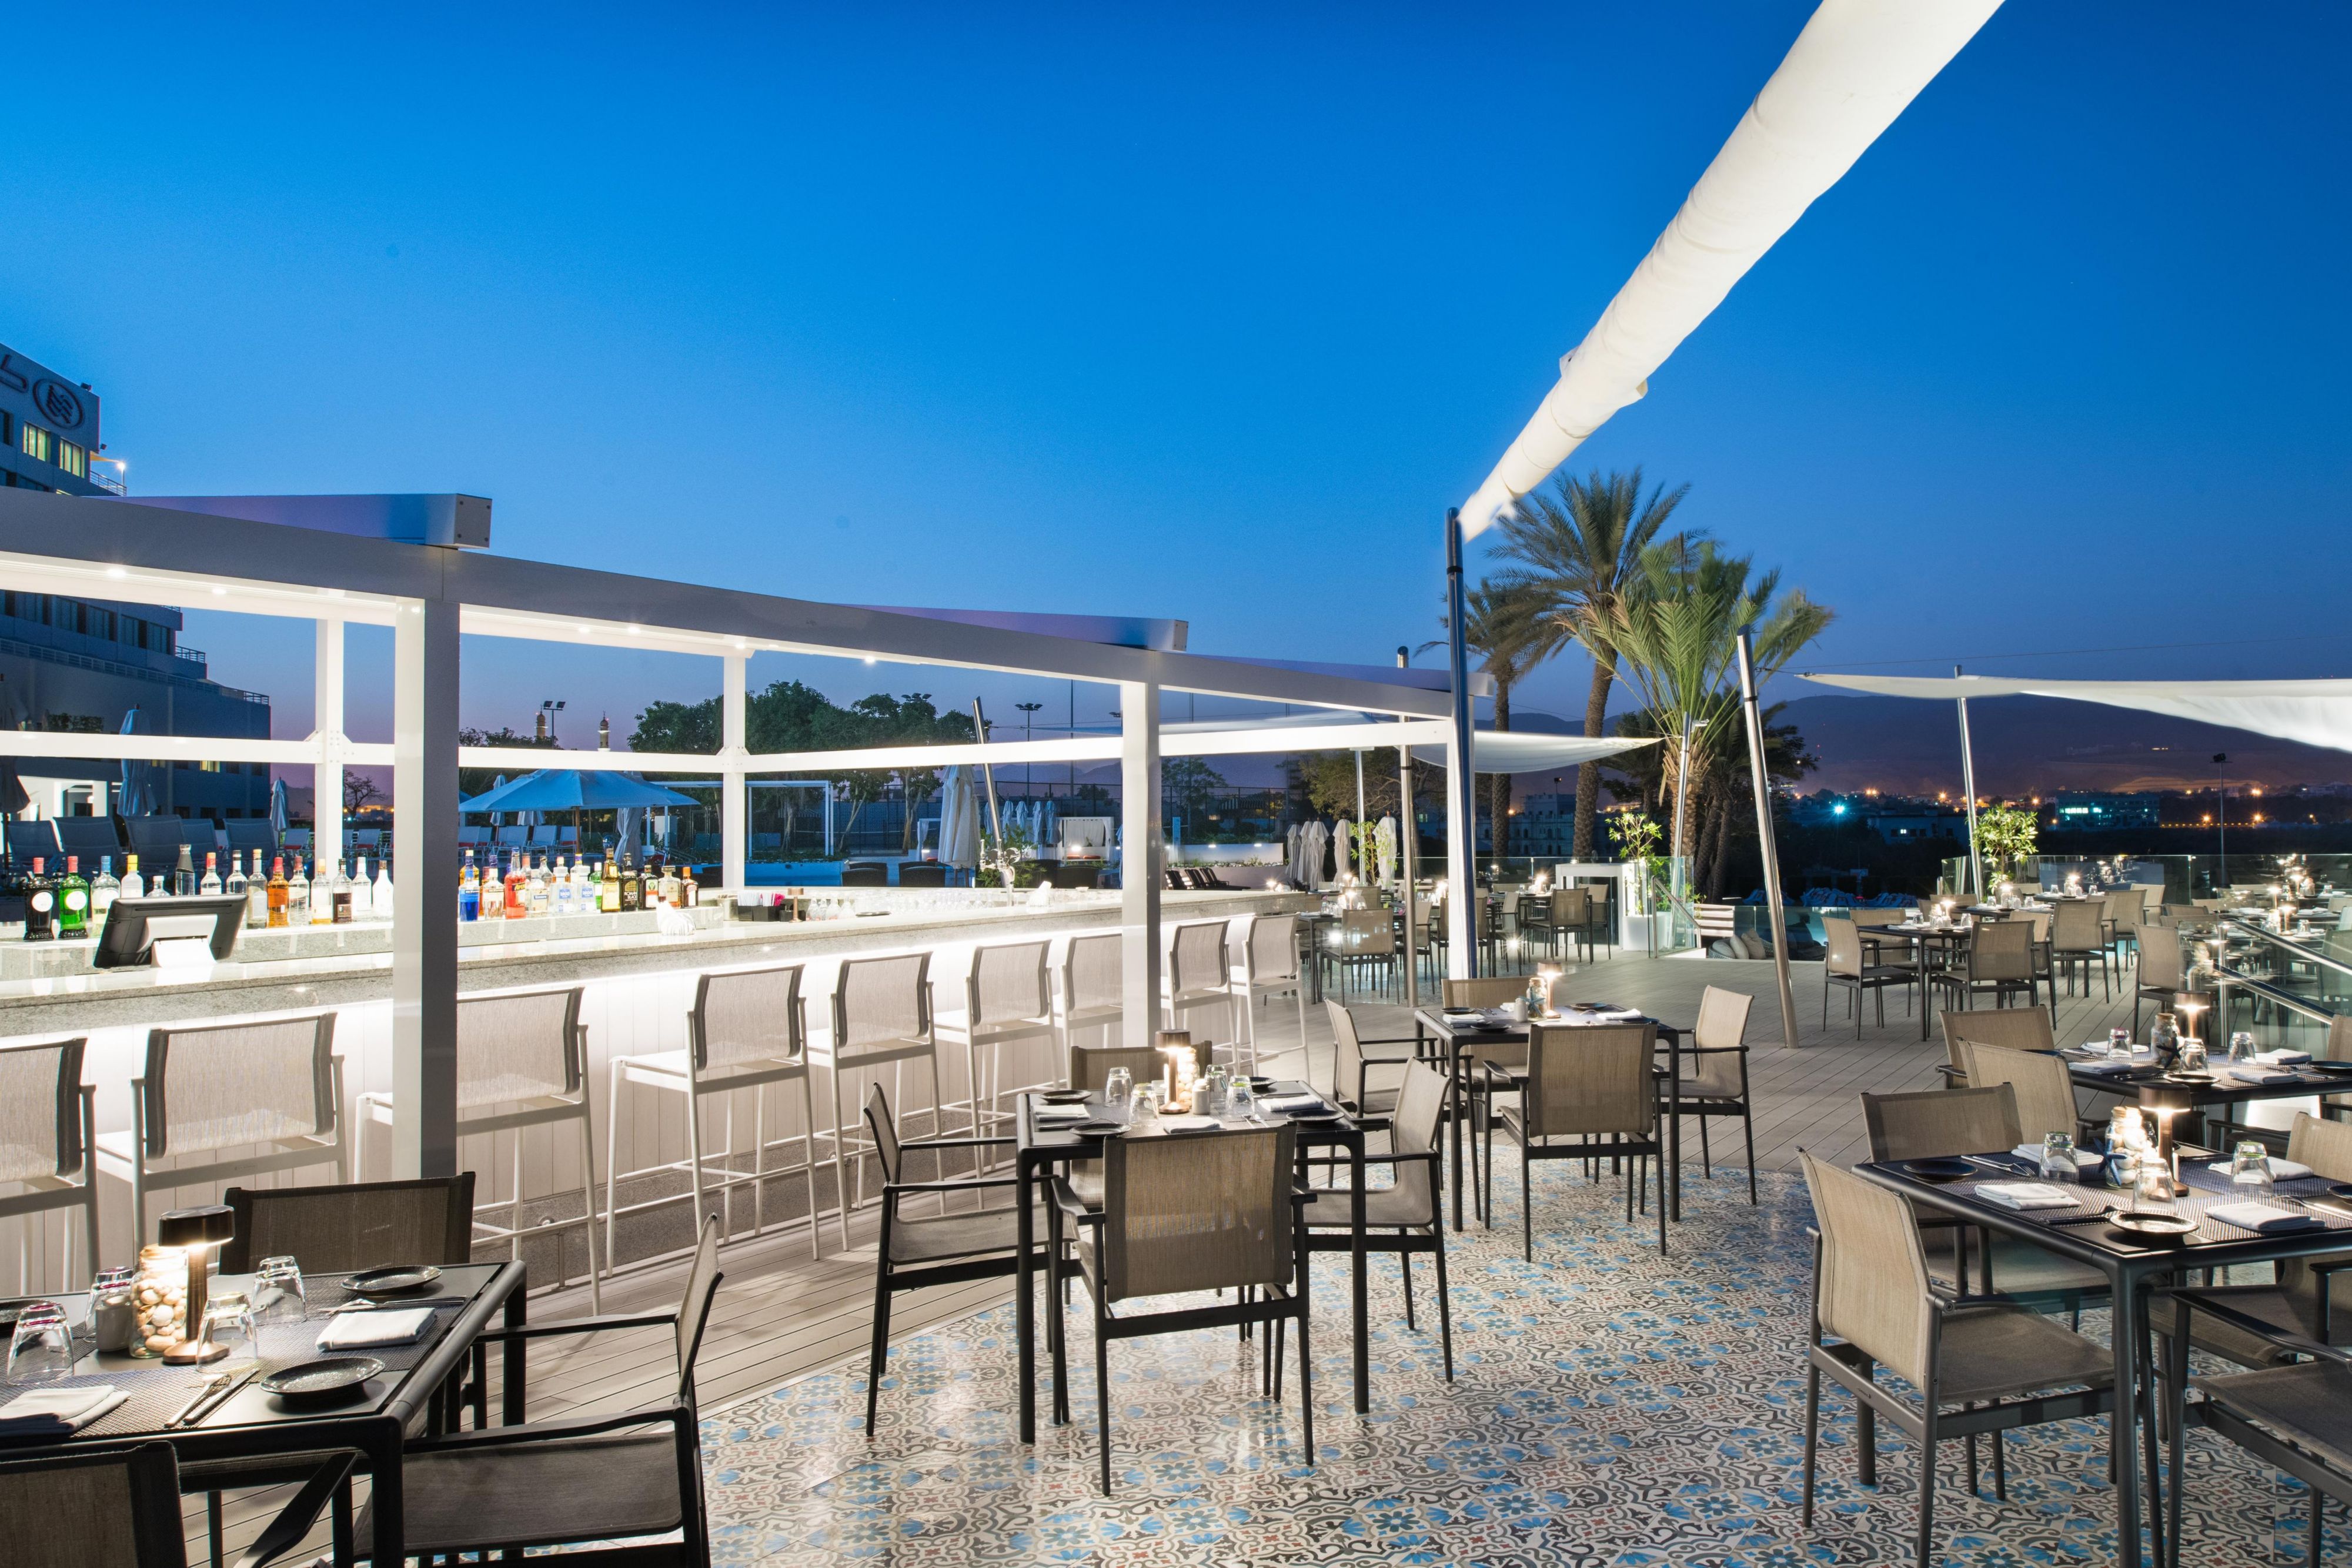 The Edge Restaurant Terrace with striking panoramic views